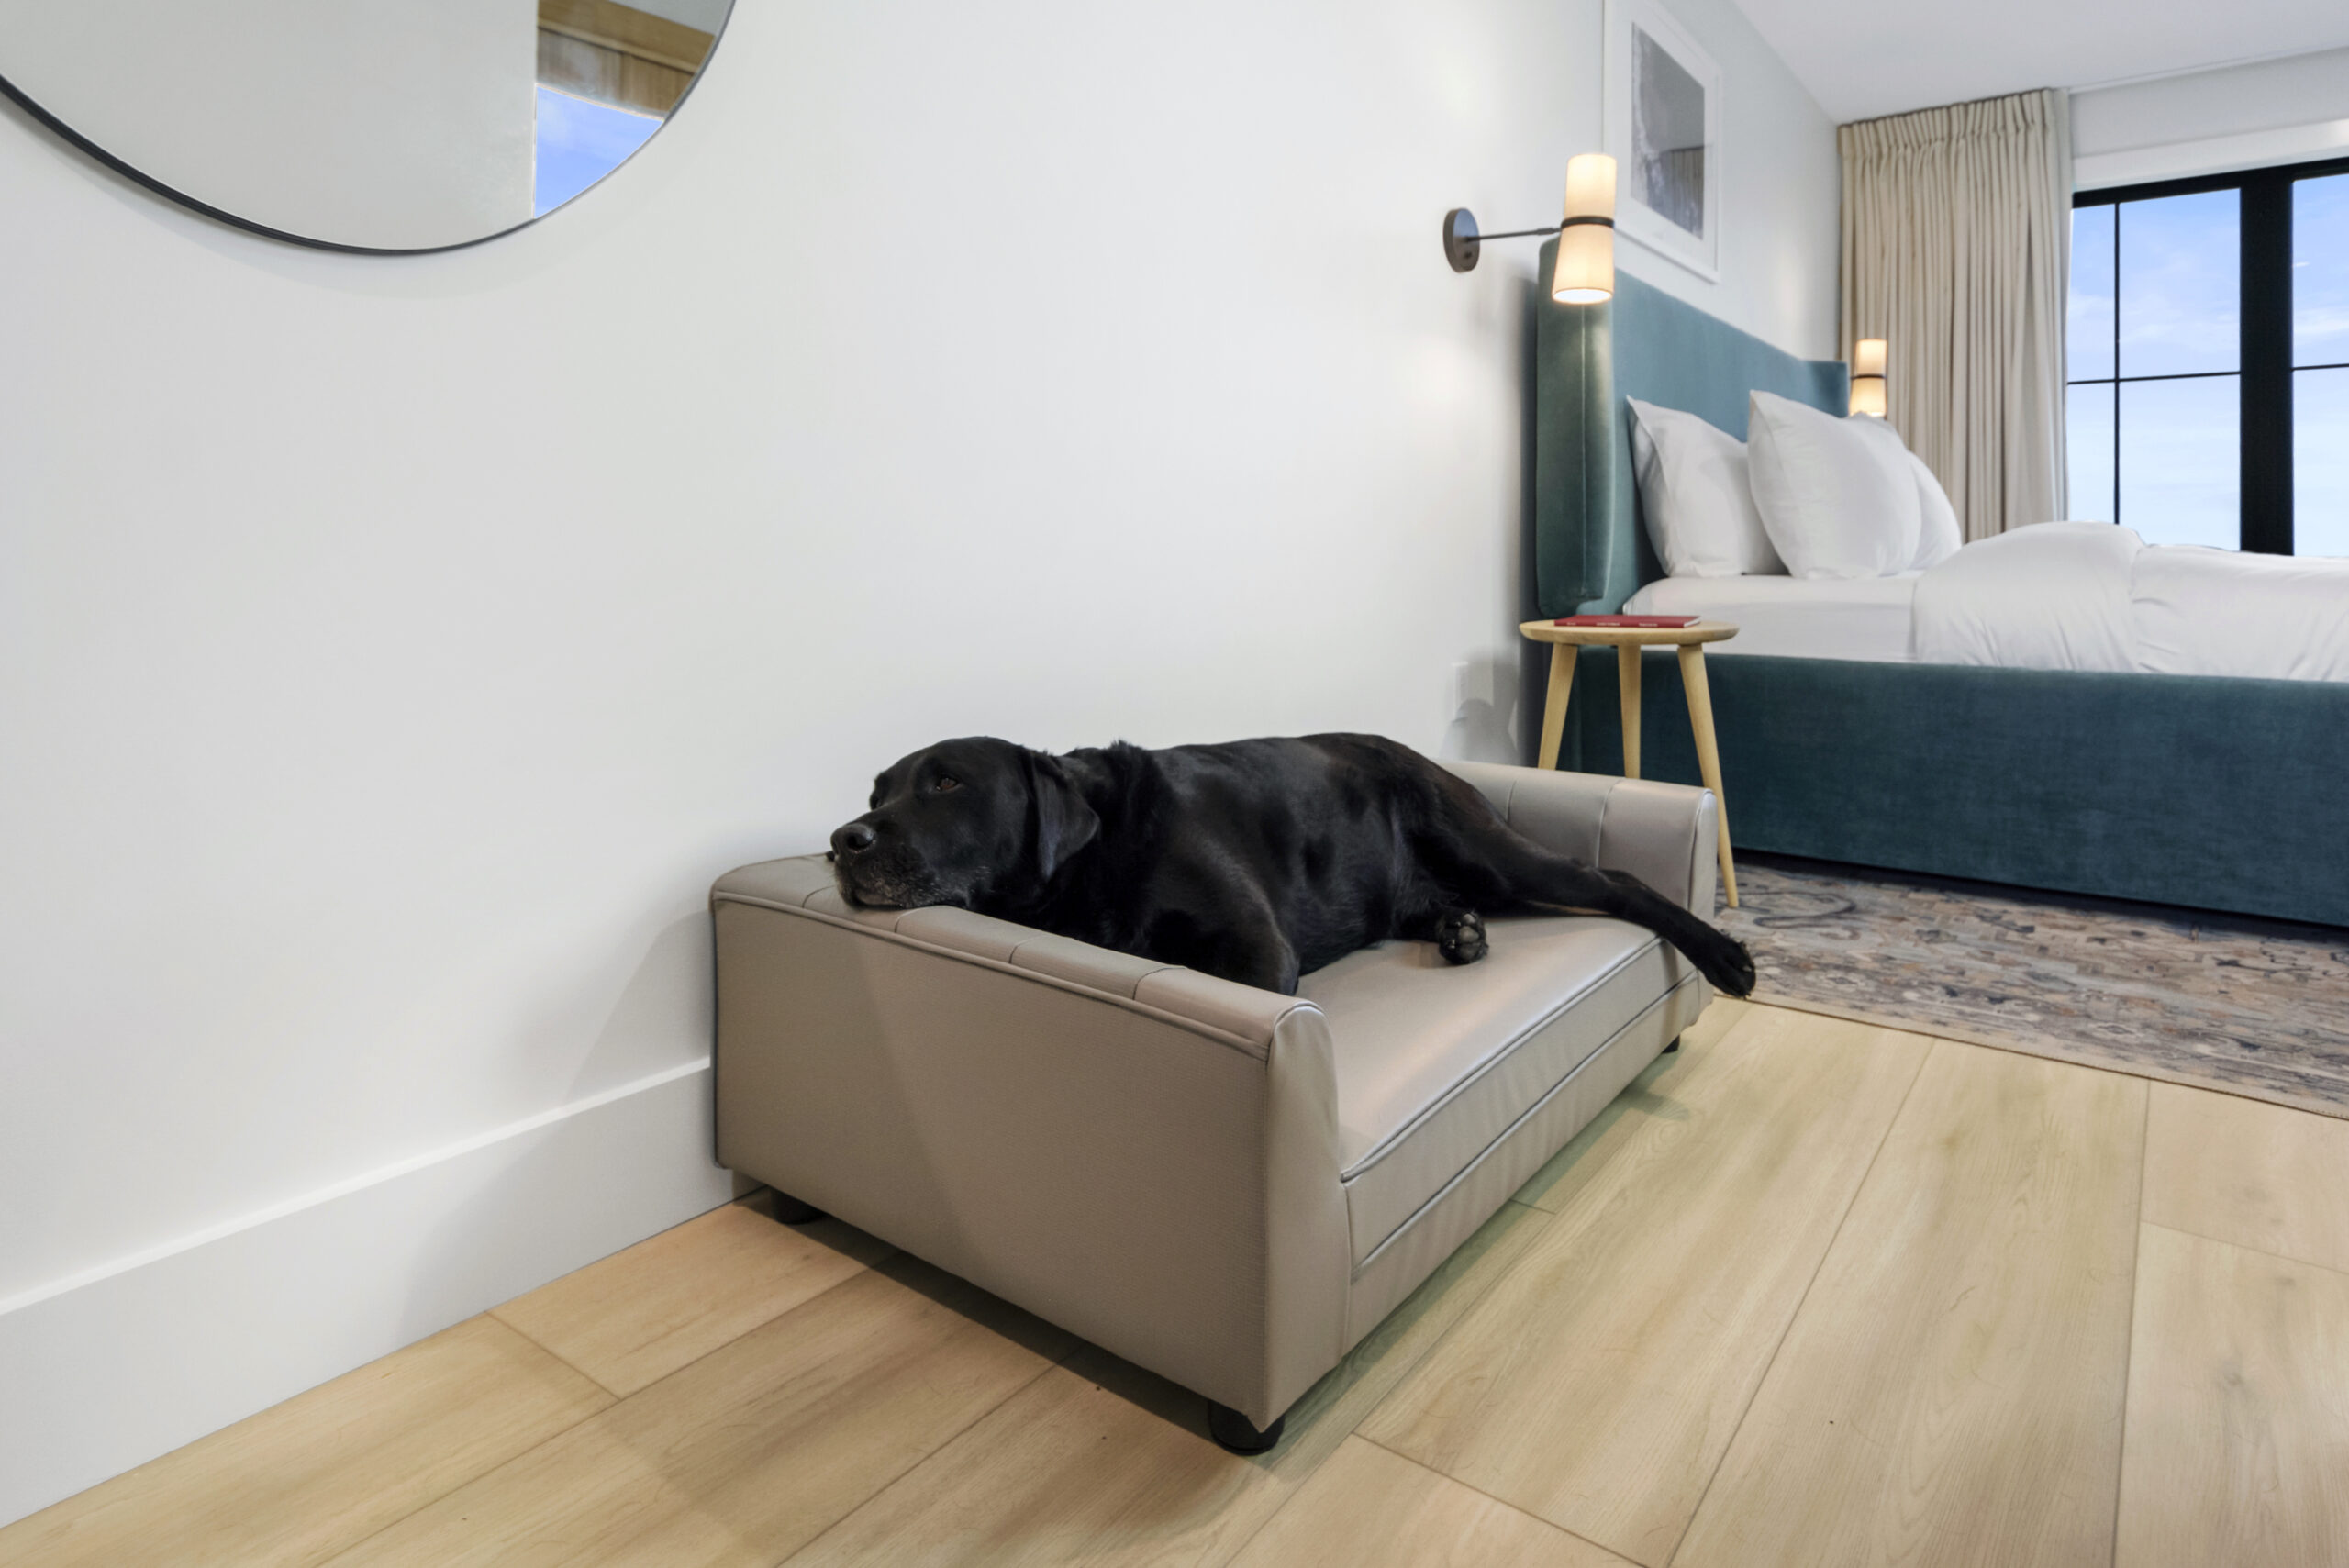 Black dog lying down in a beige dog bed.